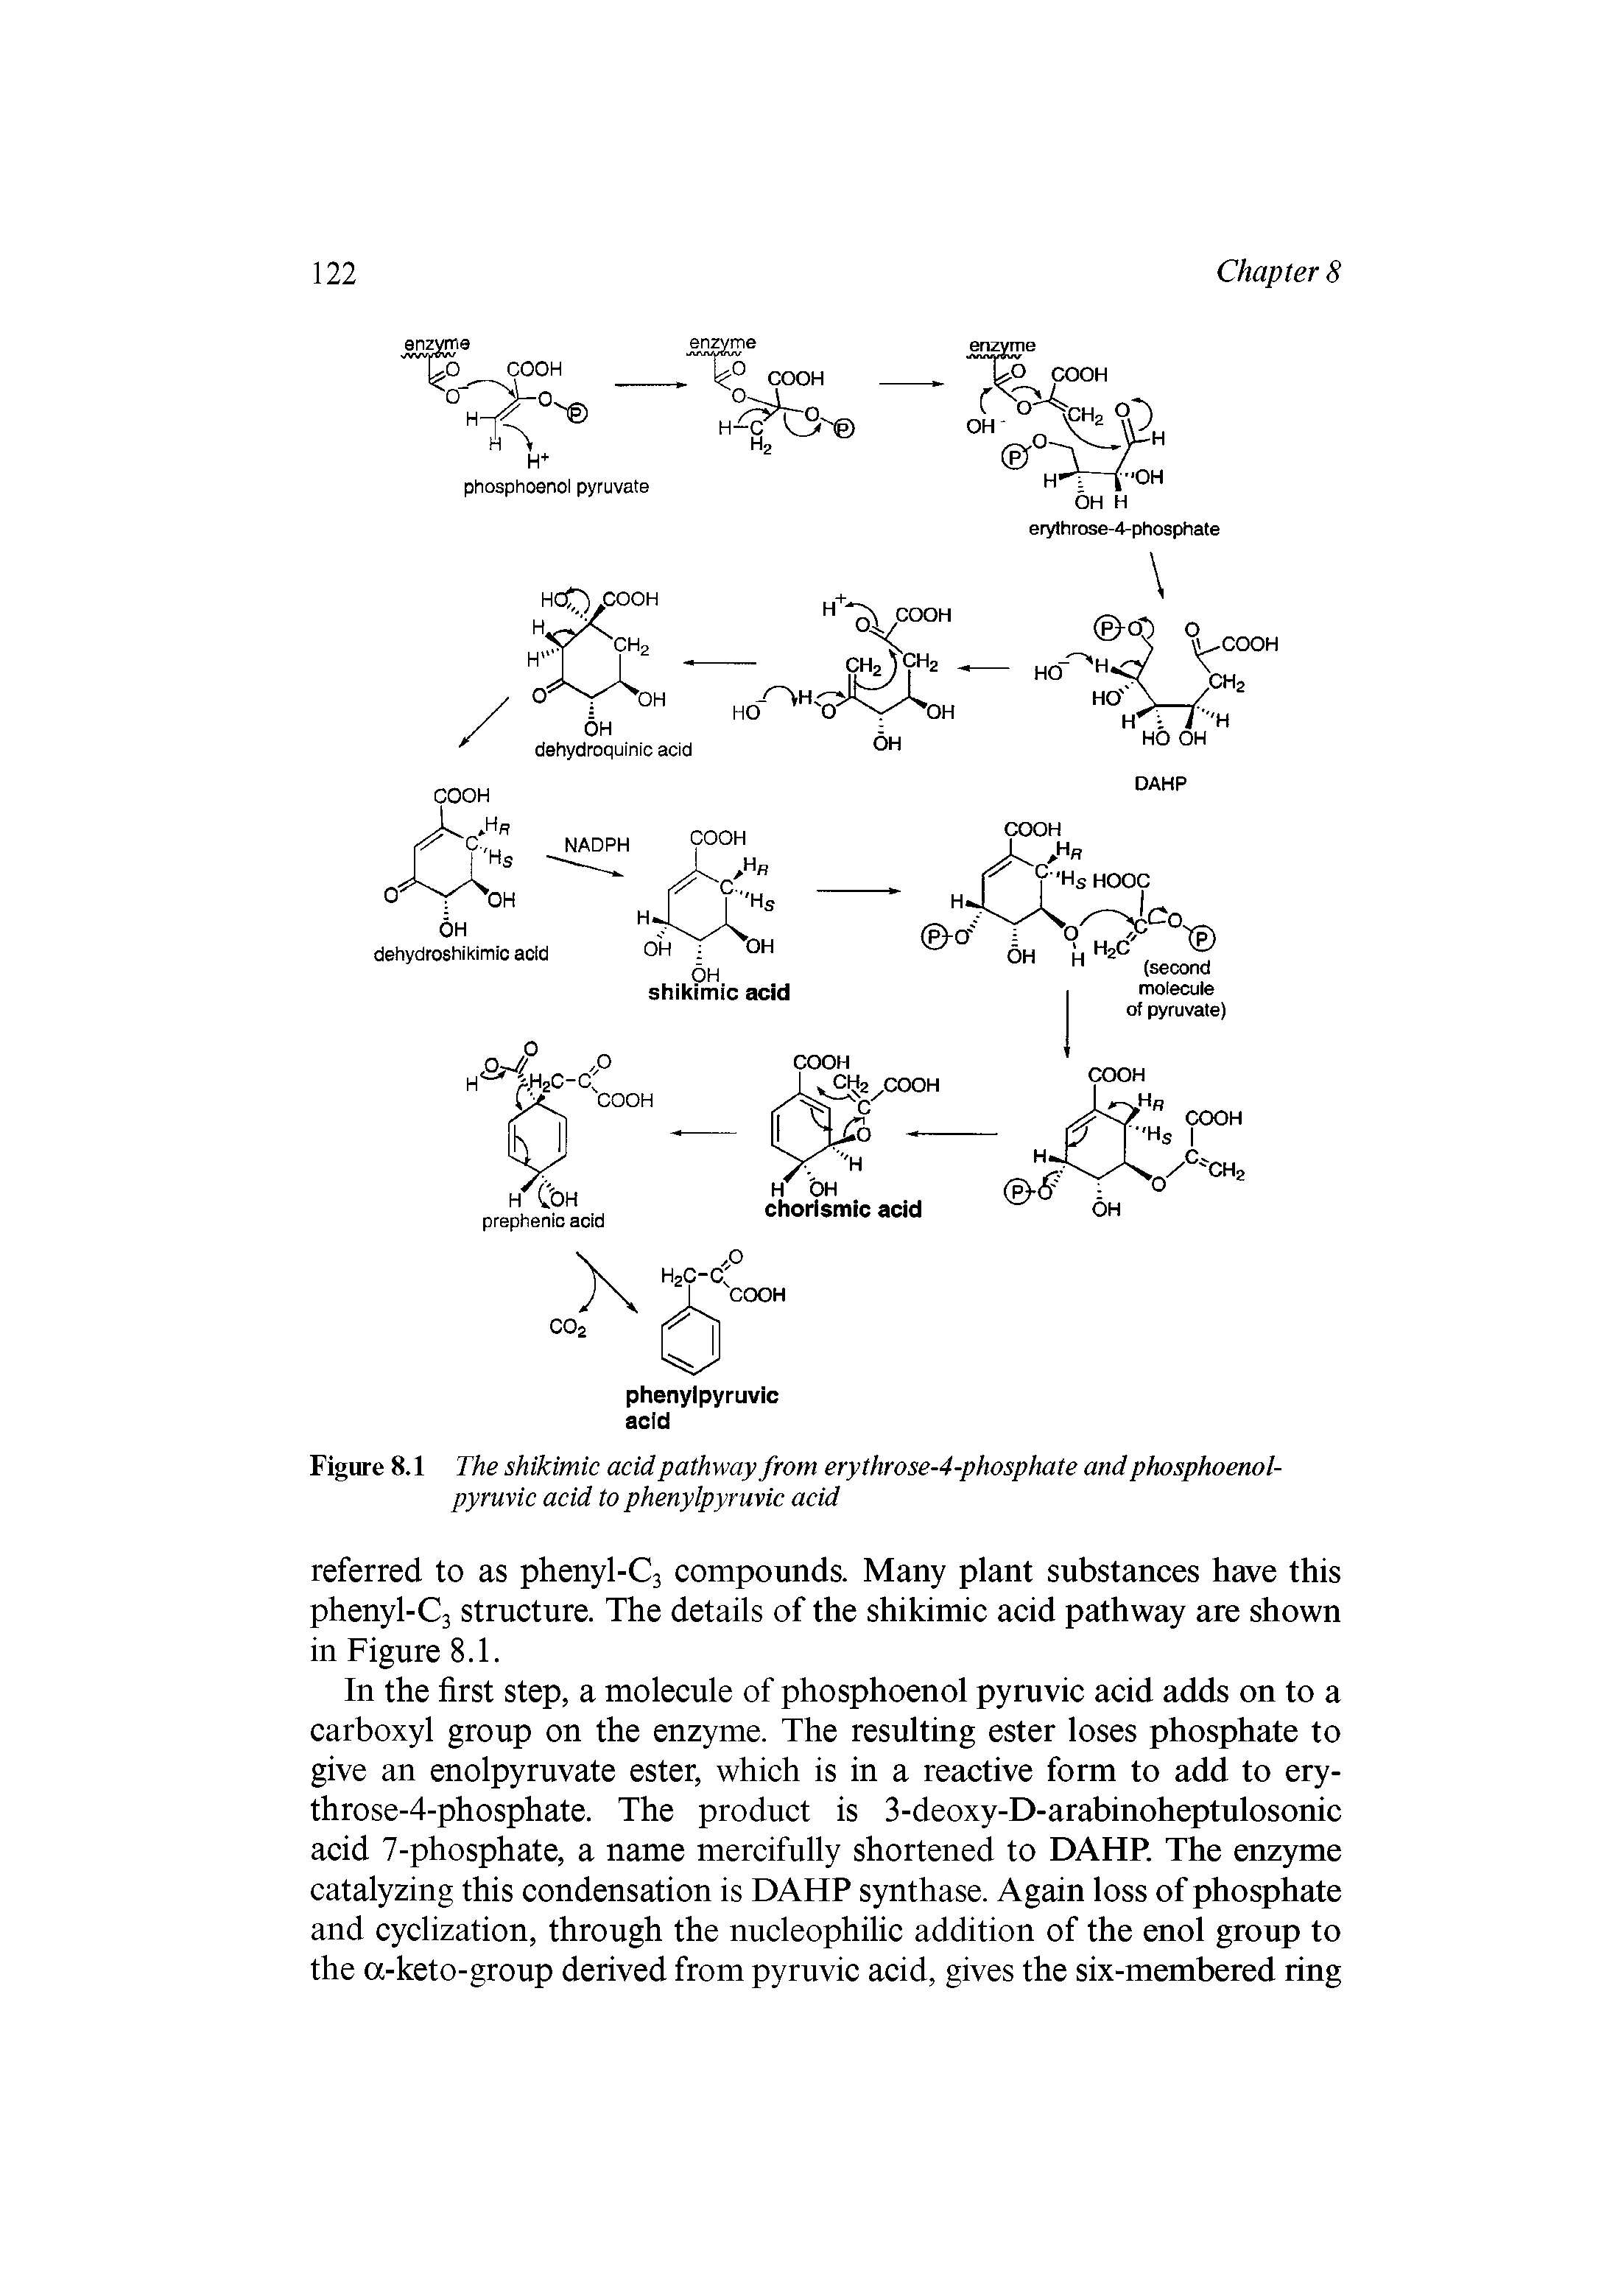 Figure 8.1 The shikimic acid pathway from erythrose-4-phosphate and phosphoenol-pyruvic acid to phenylpyruvic acid...